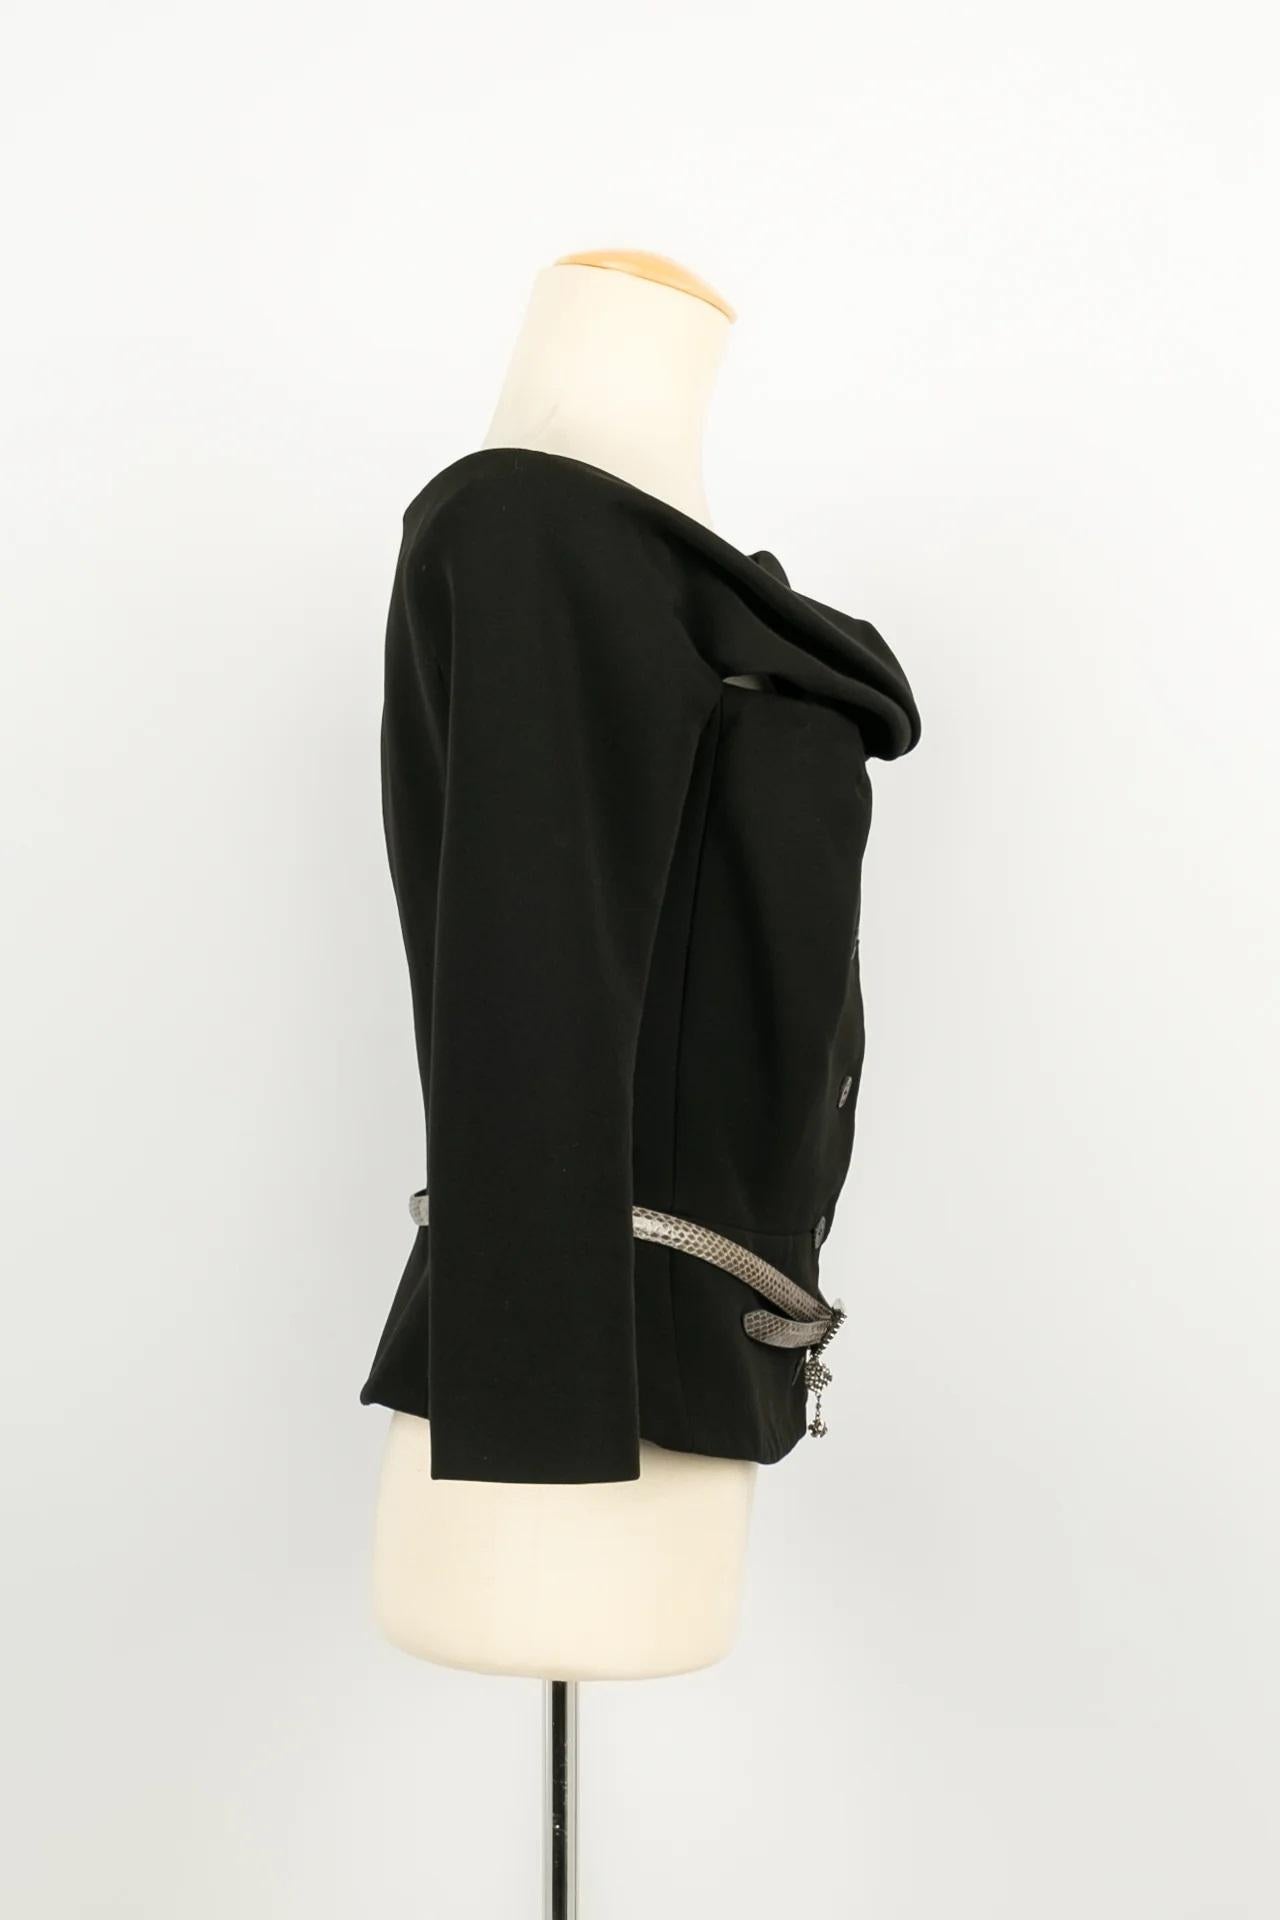 Women's Dior Christian Asymmetrical Black Top For Sale